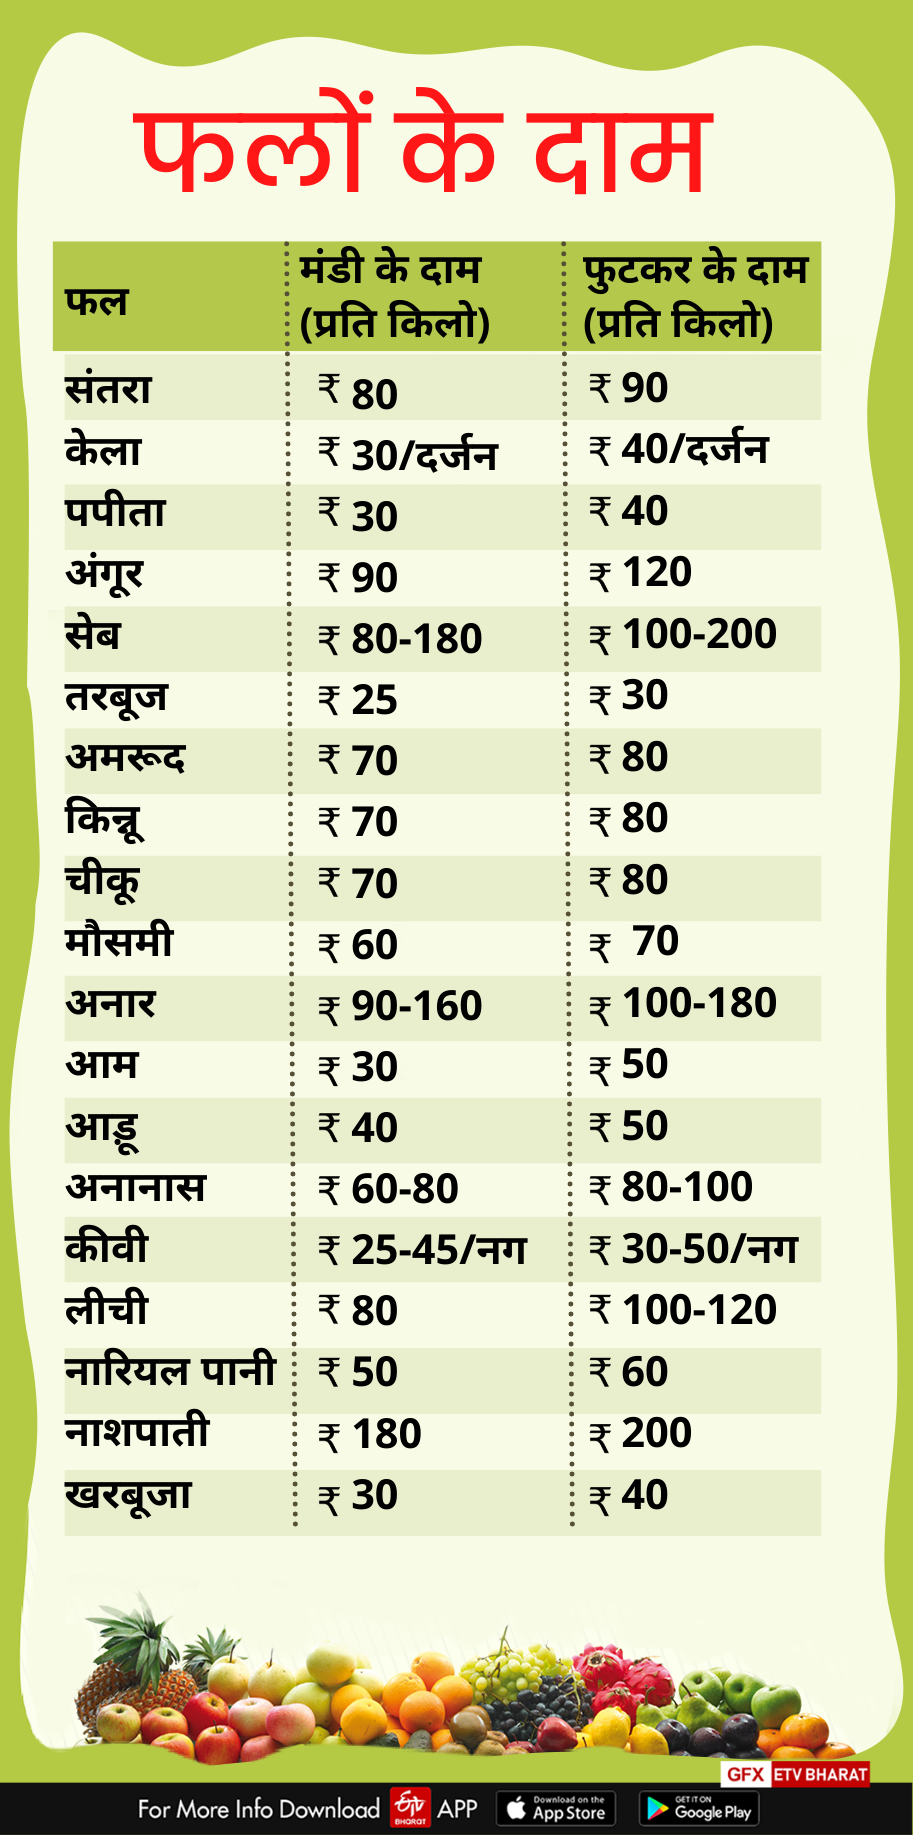 Dehradun vegetables price